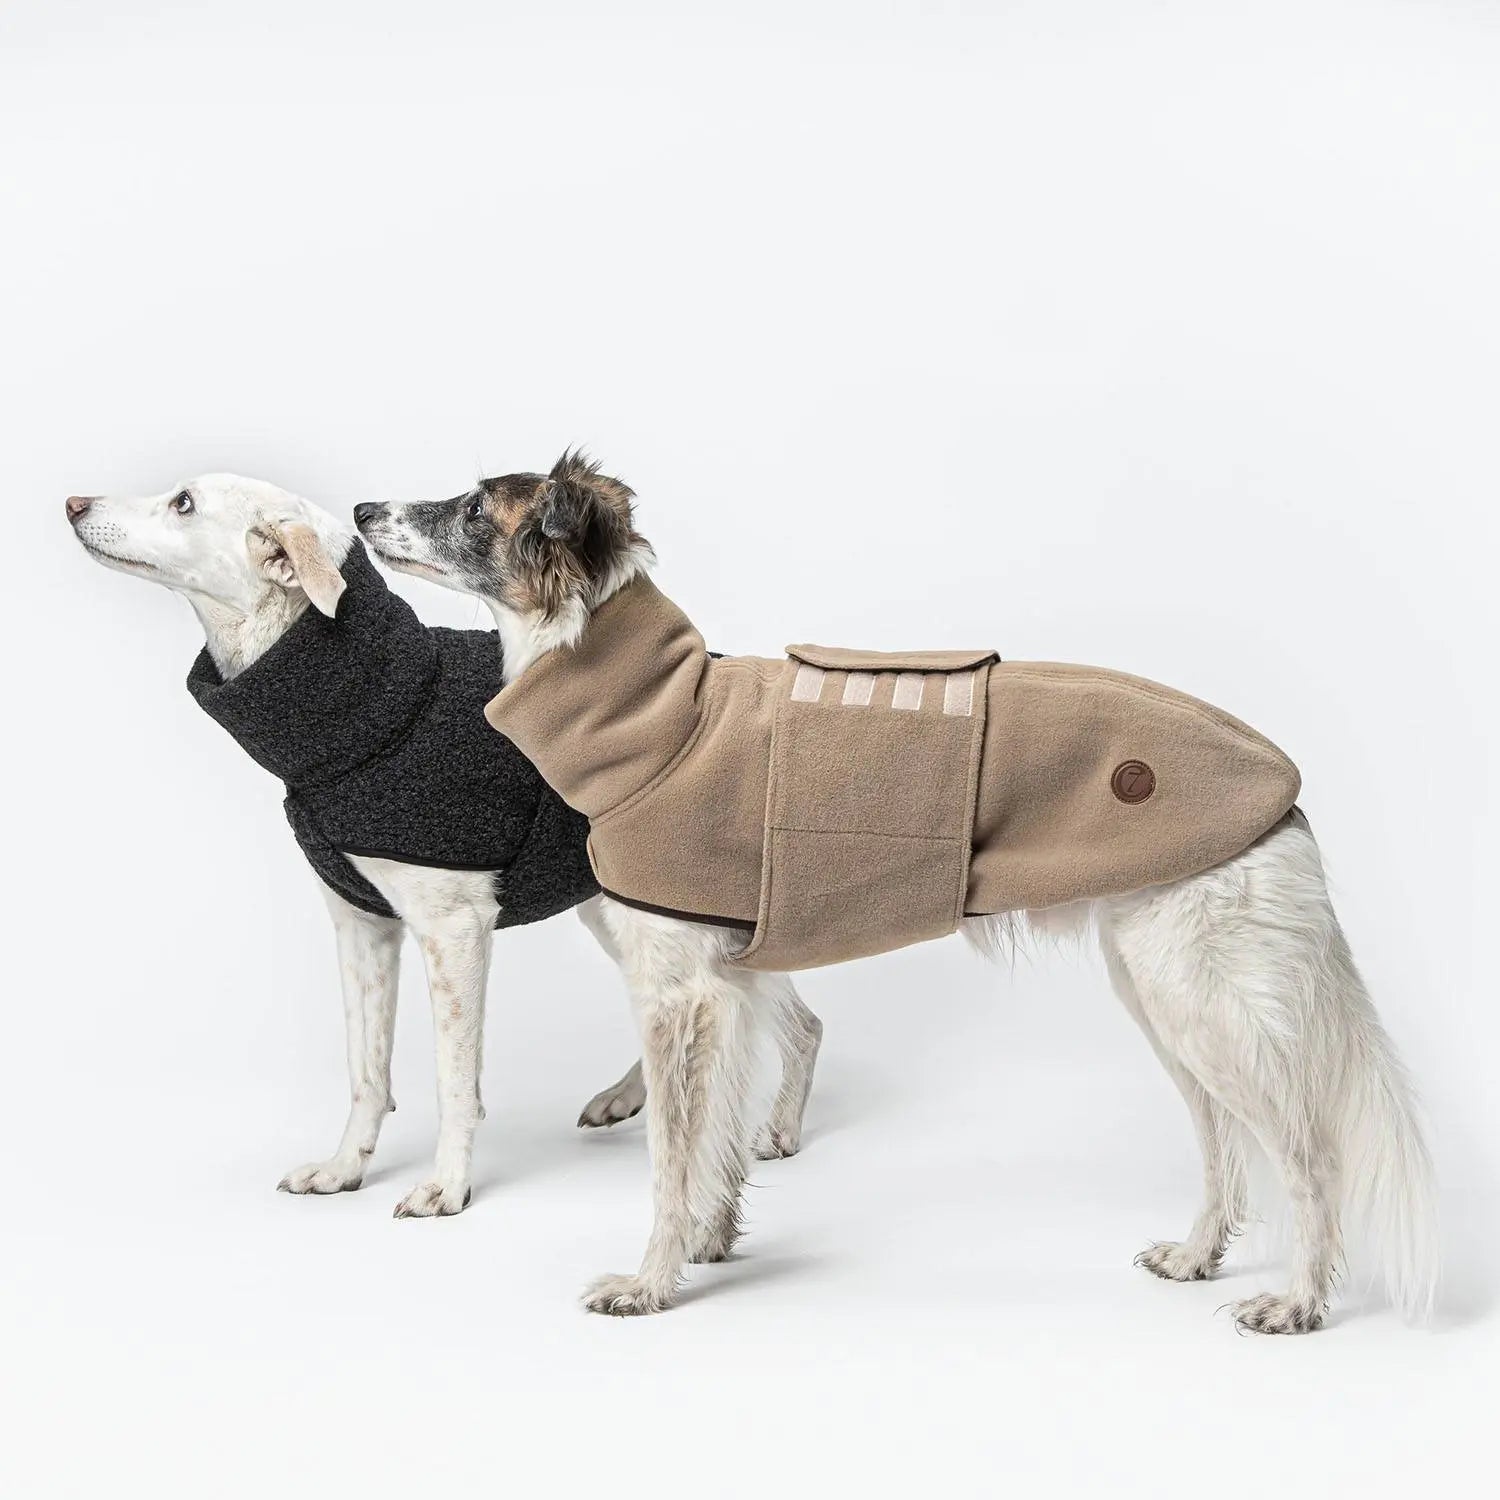 Cloud7 hundesweater, Derby Fleece, Old – Luksushund